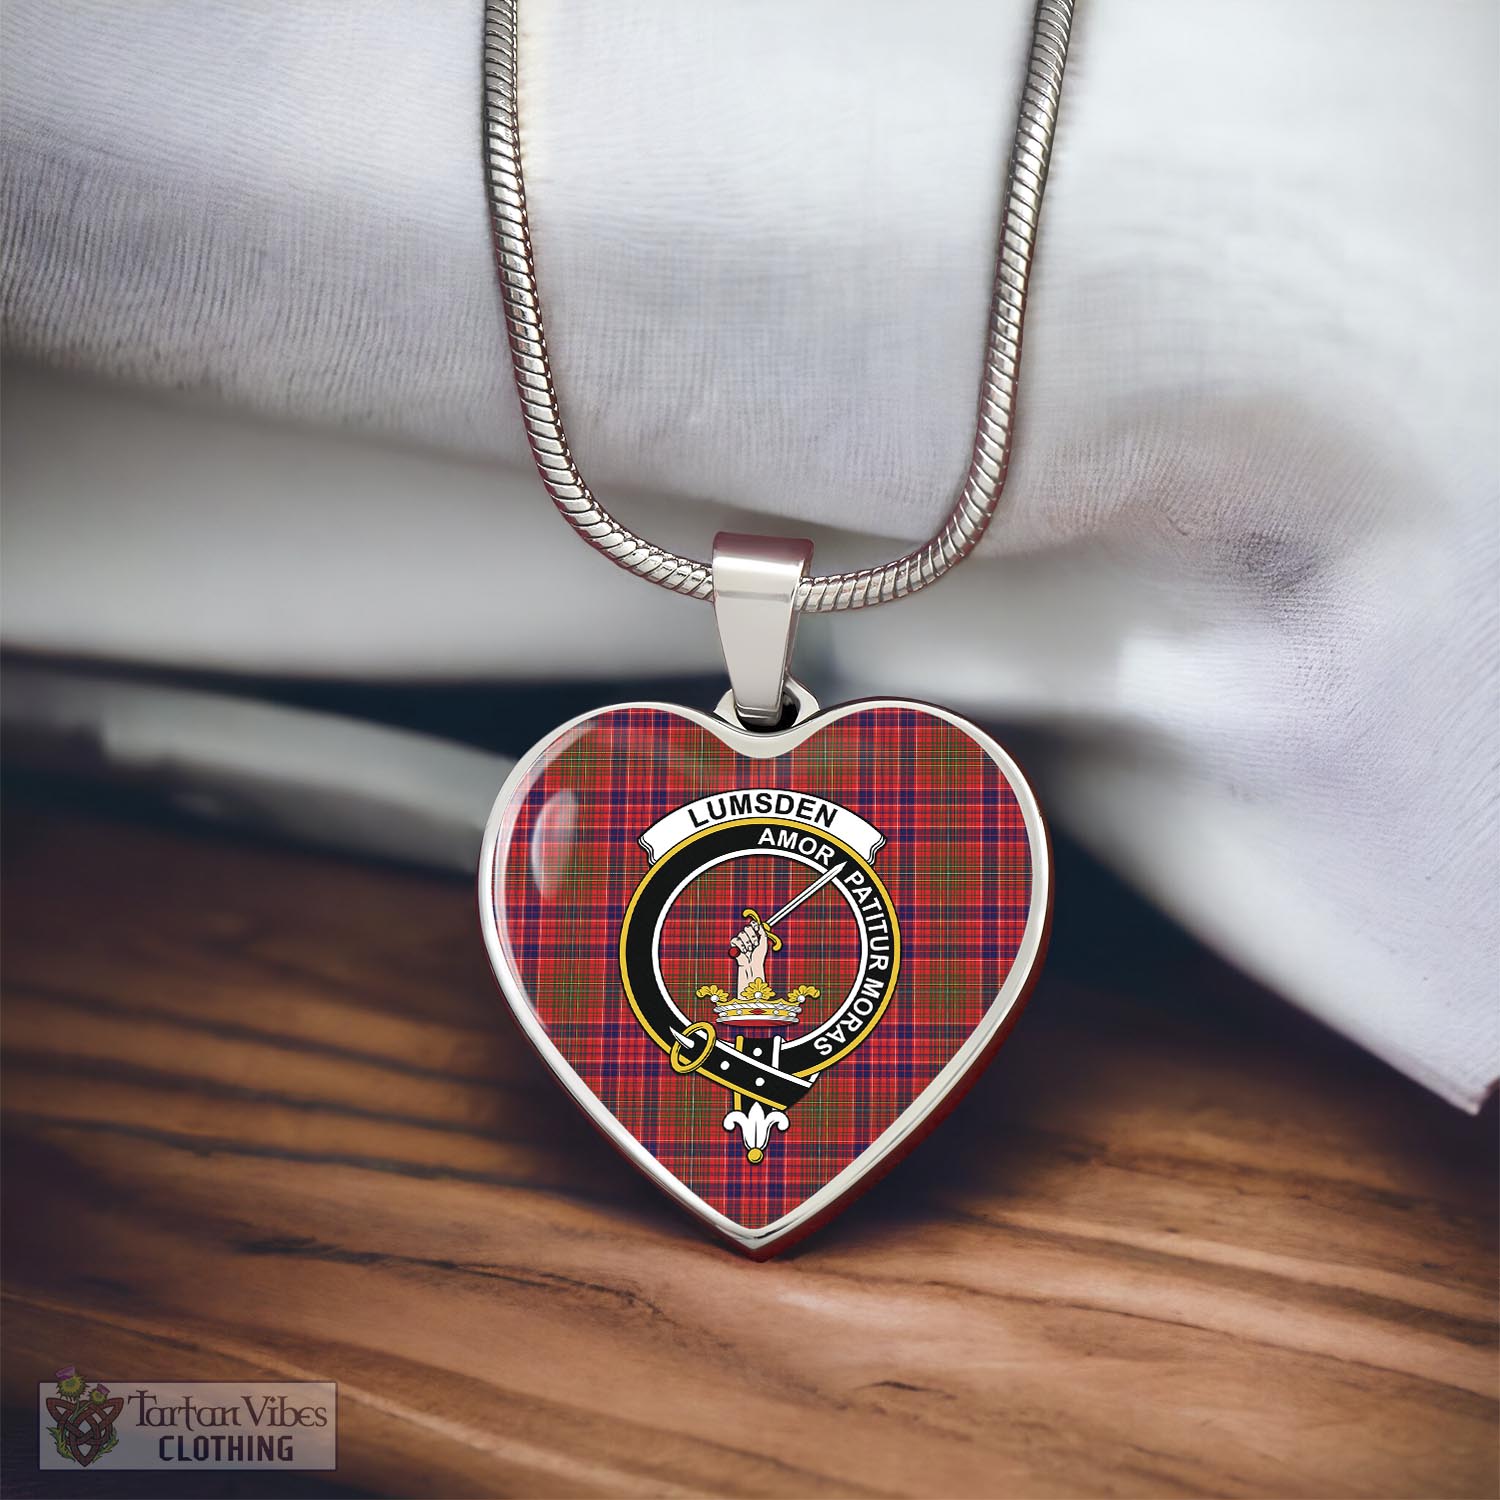 Tartan Vibes Clothing Lumsden Modern Tartan Heart Necklace with Family Crest